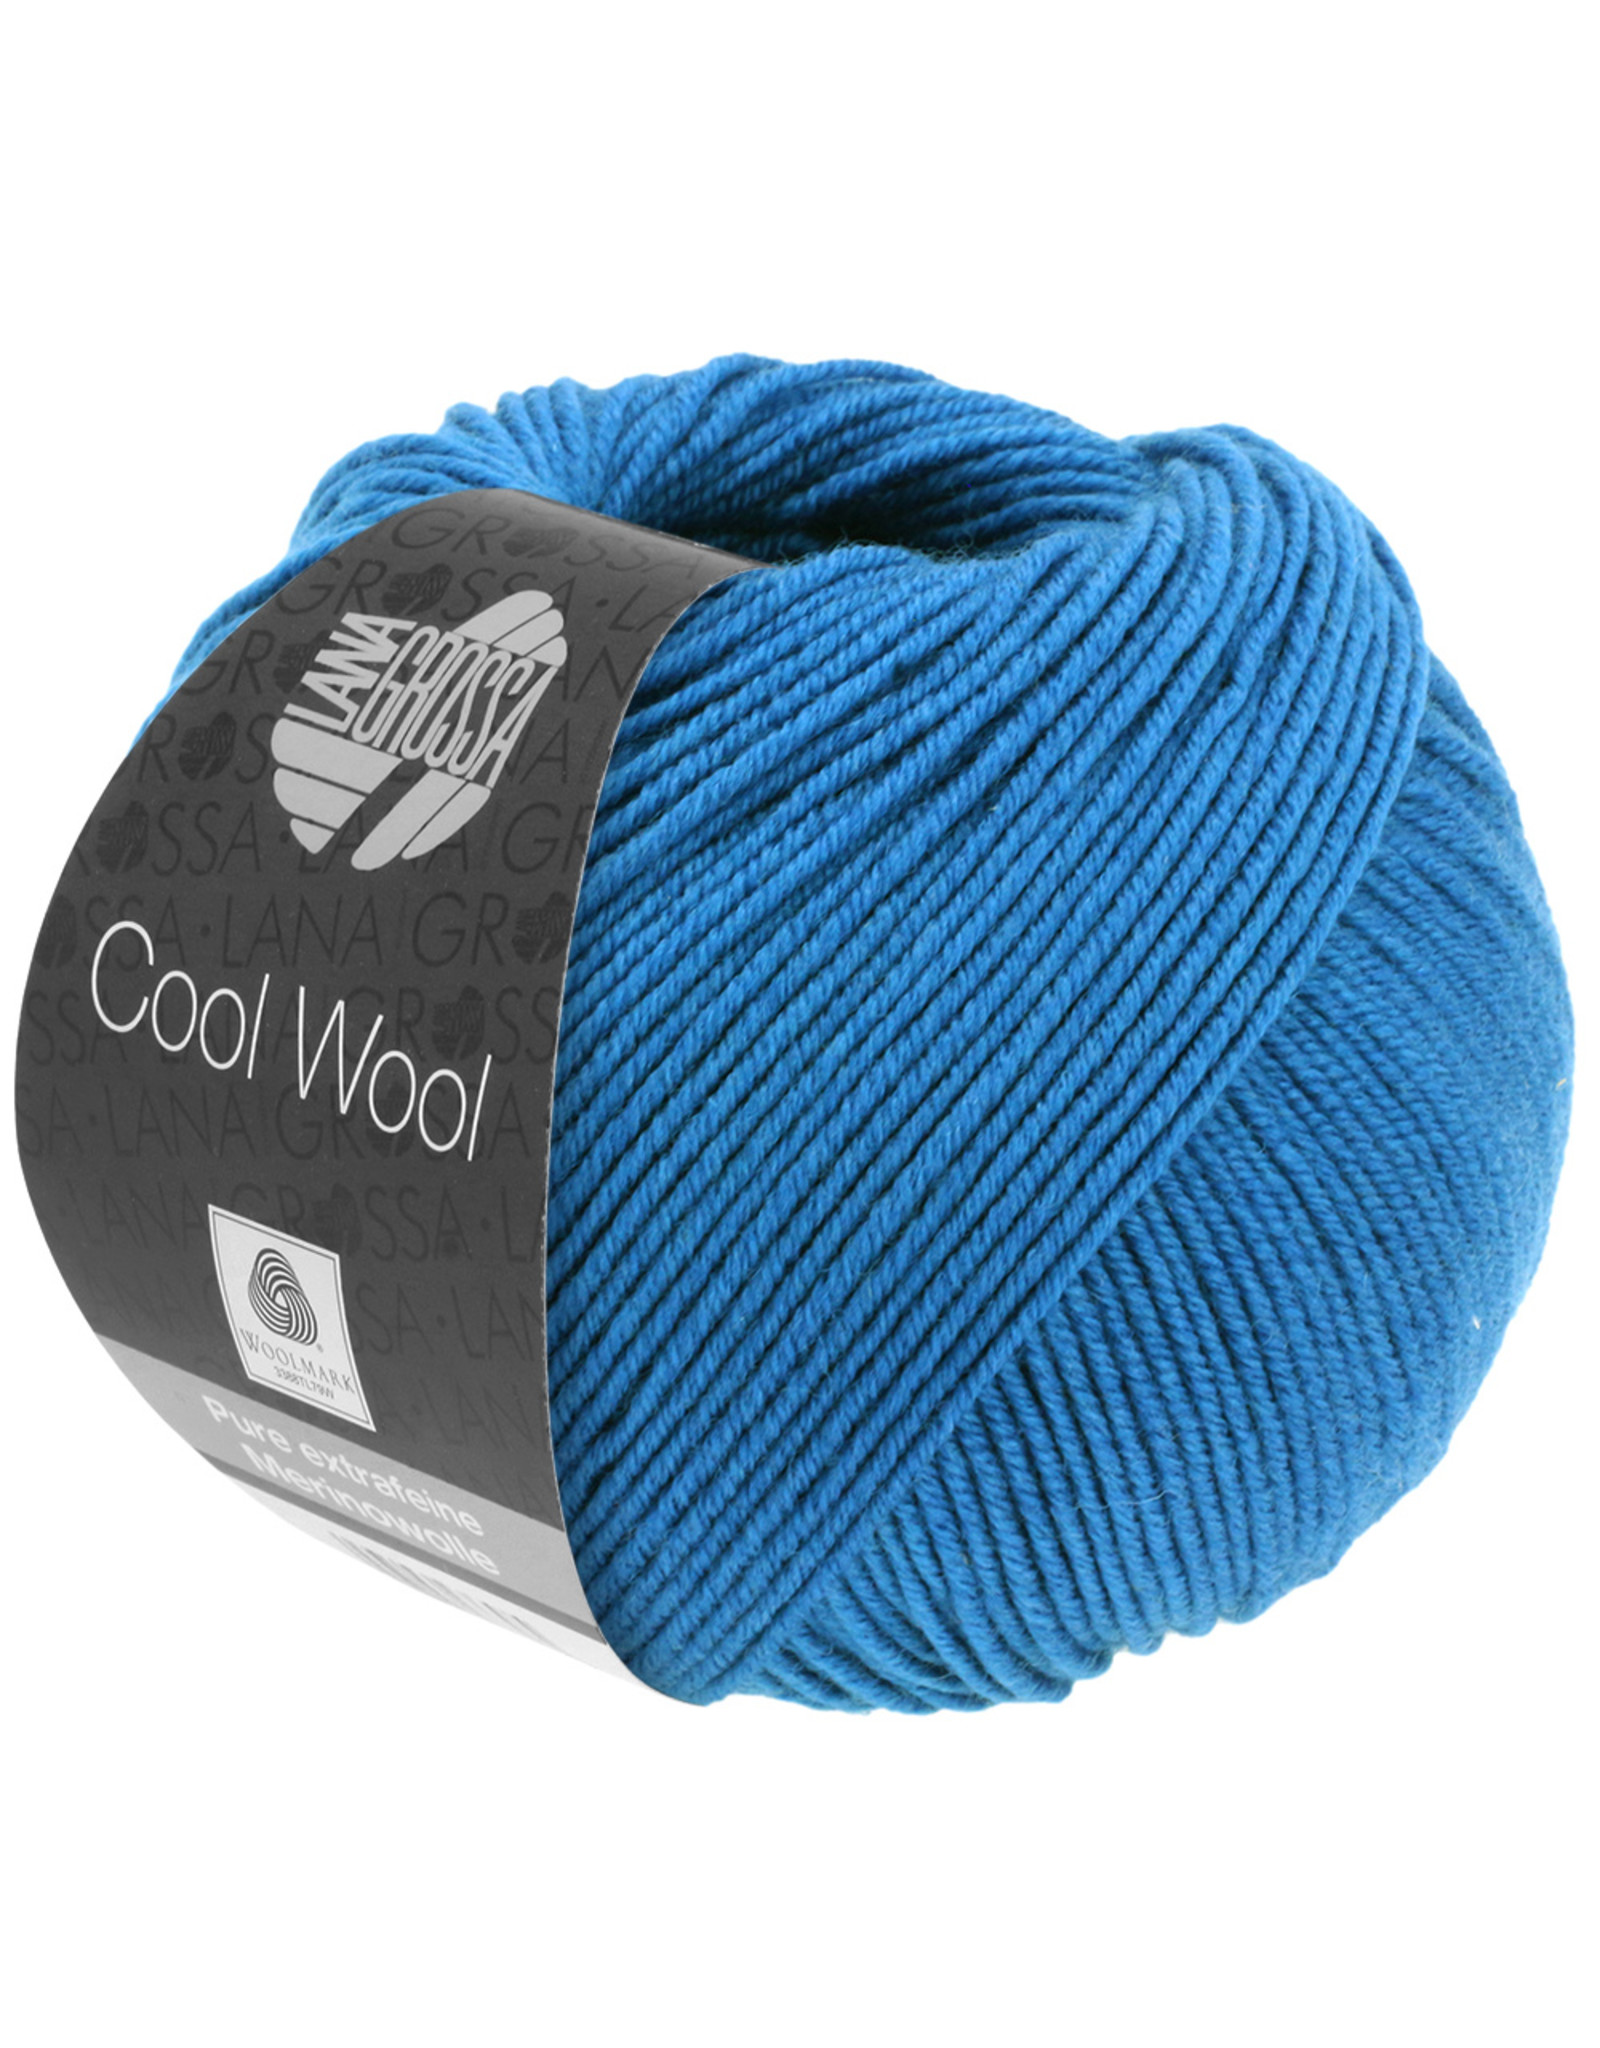 Lana Grossa Lana Grossa Cool wool 2081